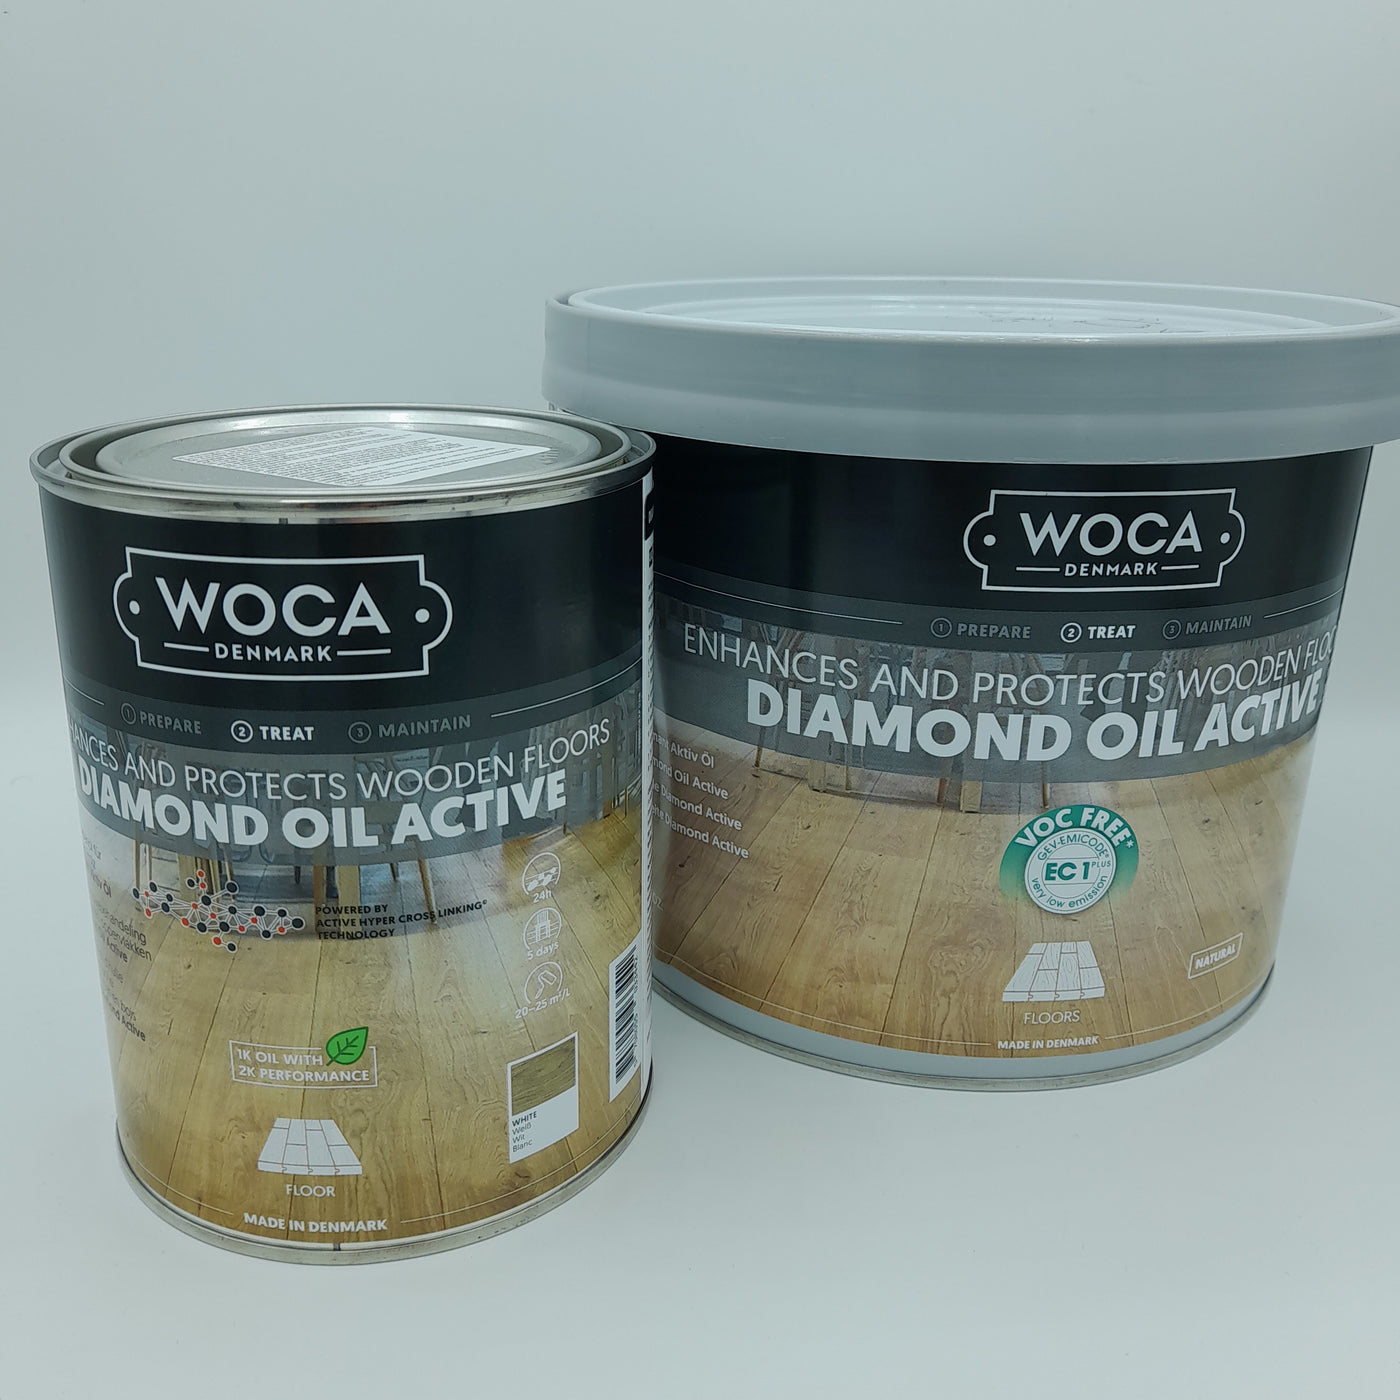 WOCA Diamond Oil Active Natural